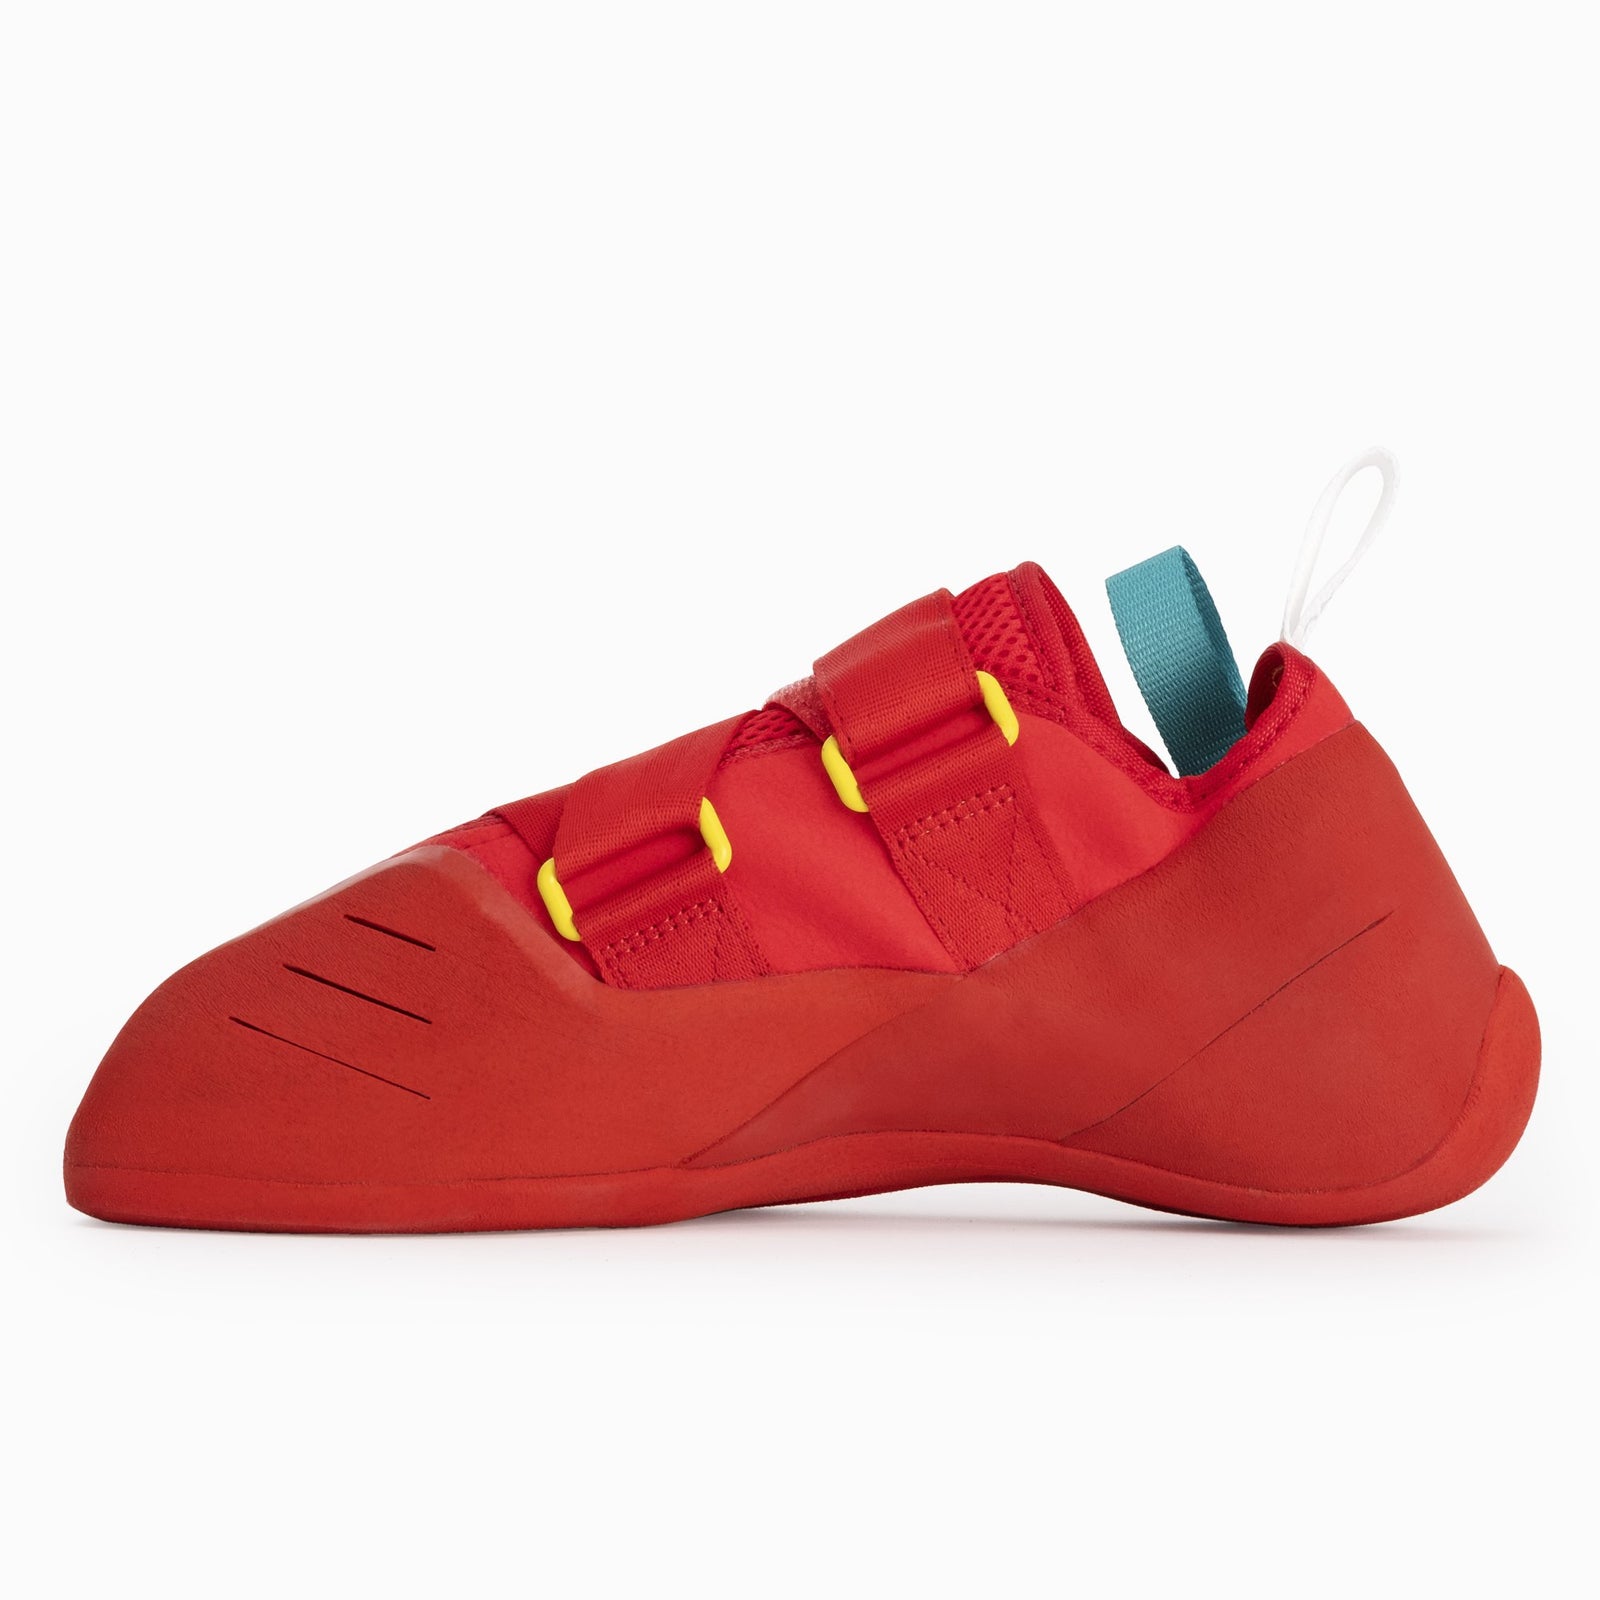 On The Roam - Wino - Pink - Jason Momoa Shoes designed with So iLL